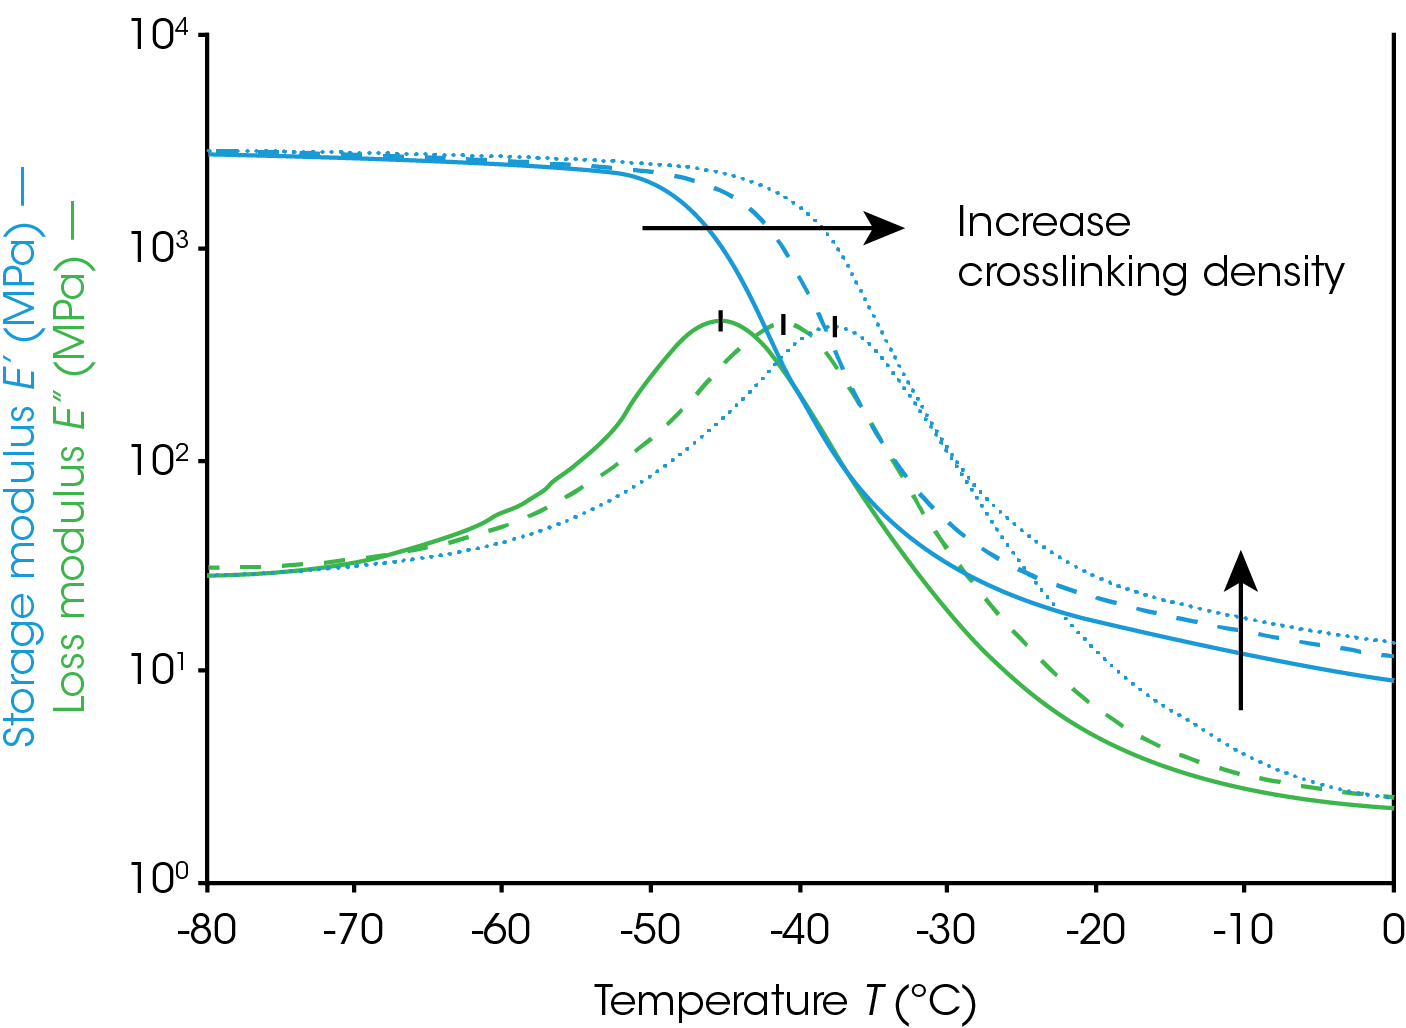 Figure 4. DMA temperature ramp tests on crosslinked elastomers with different crosslinking density